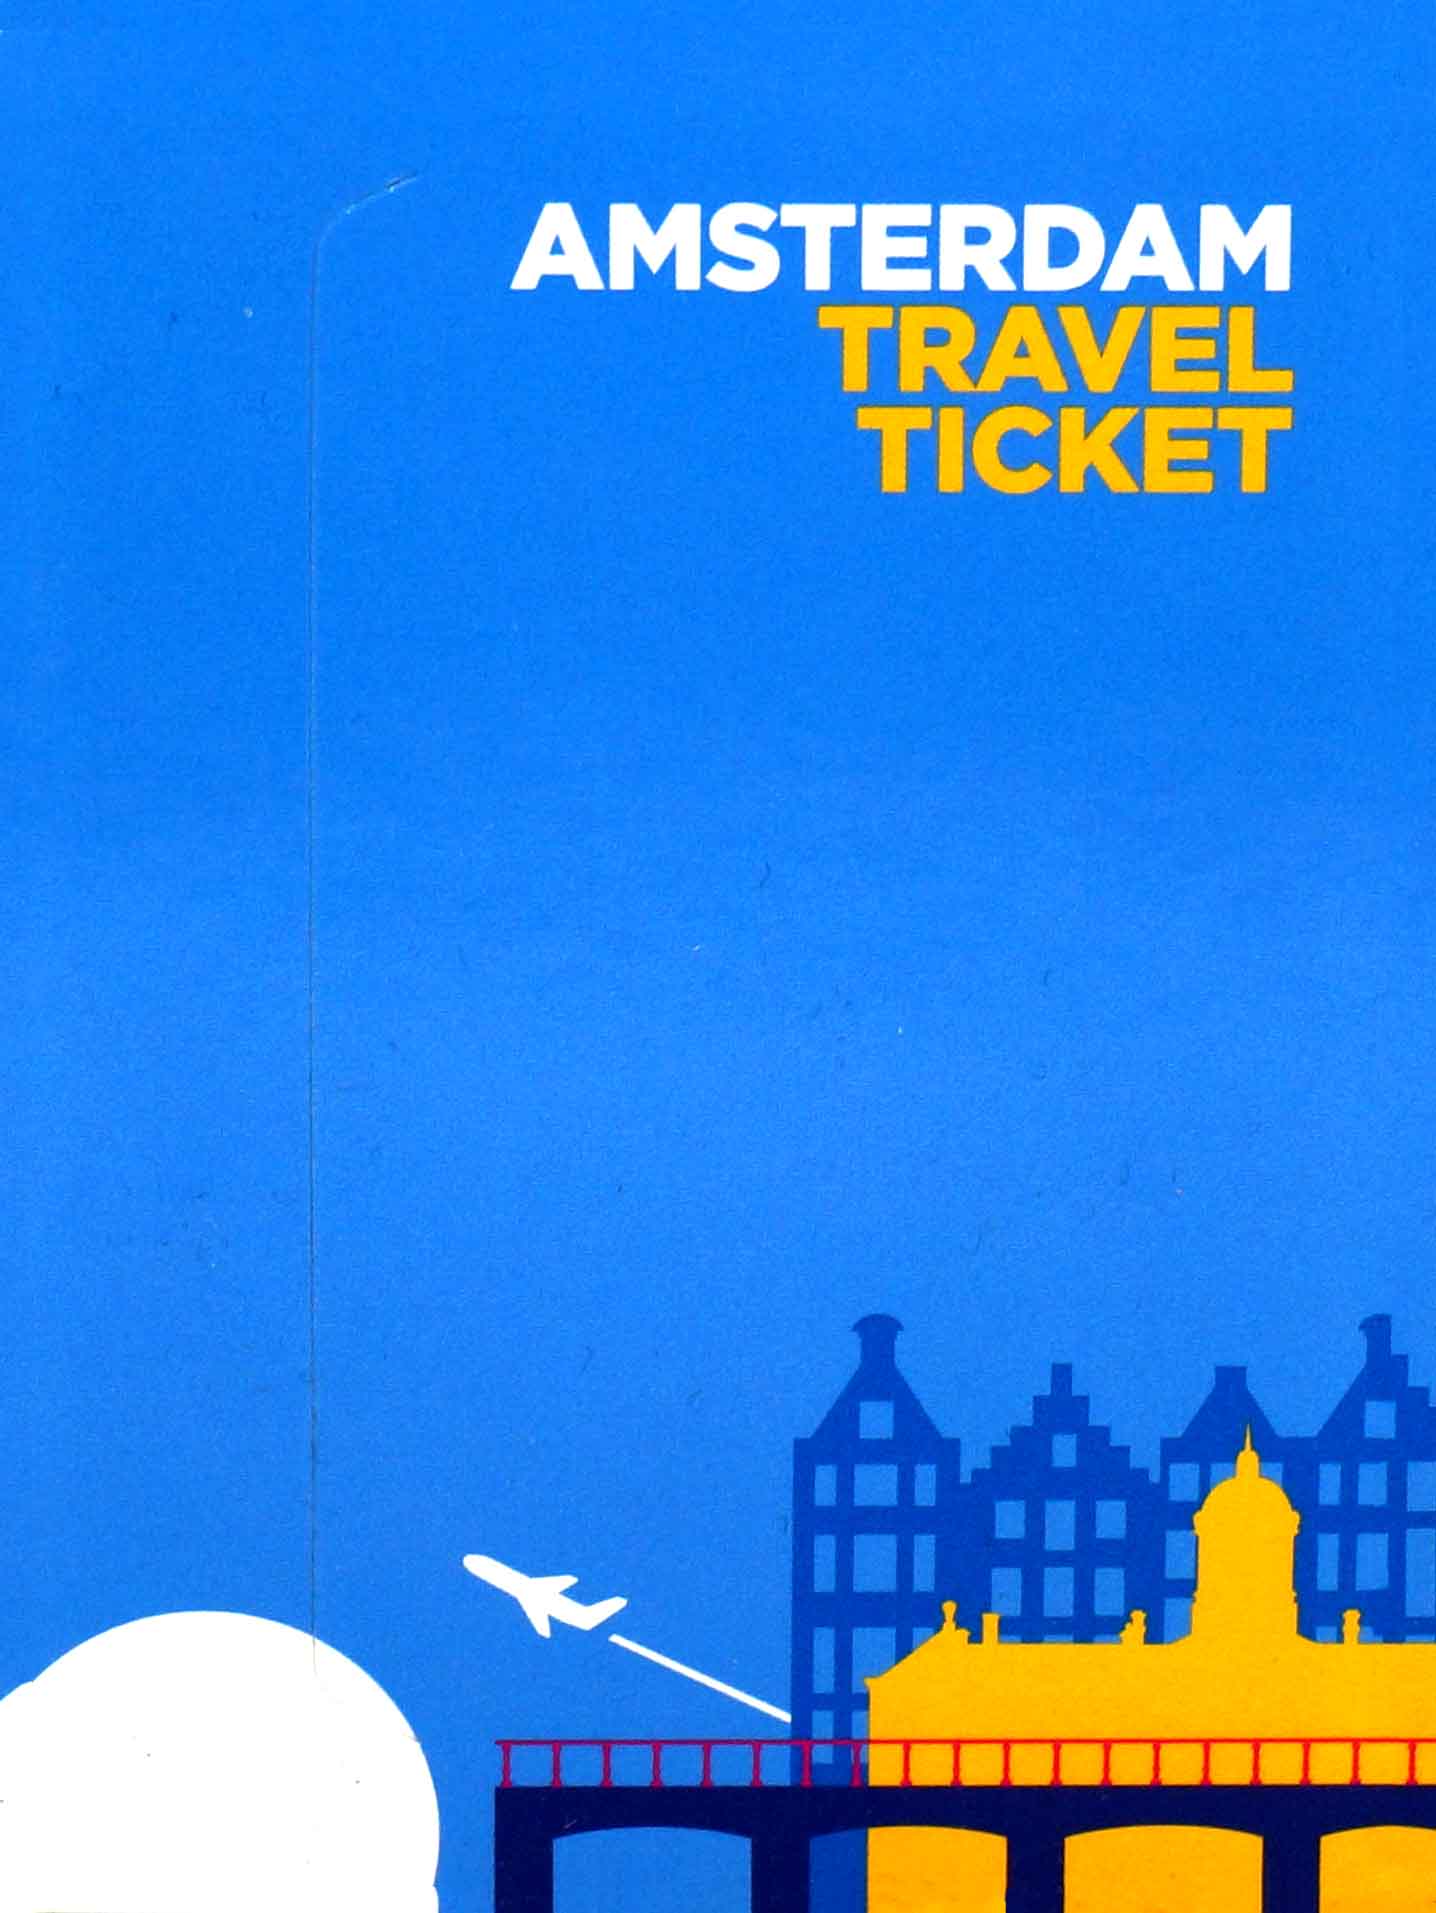 amsterdam travel ticket 1 dag